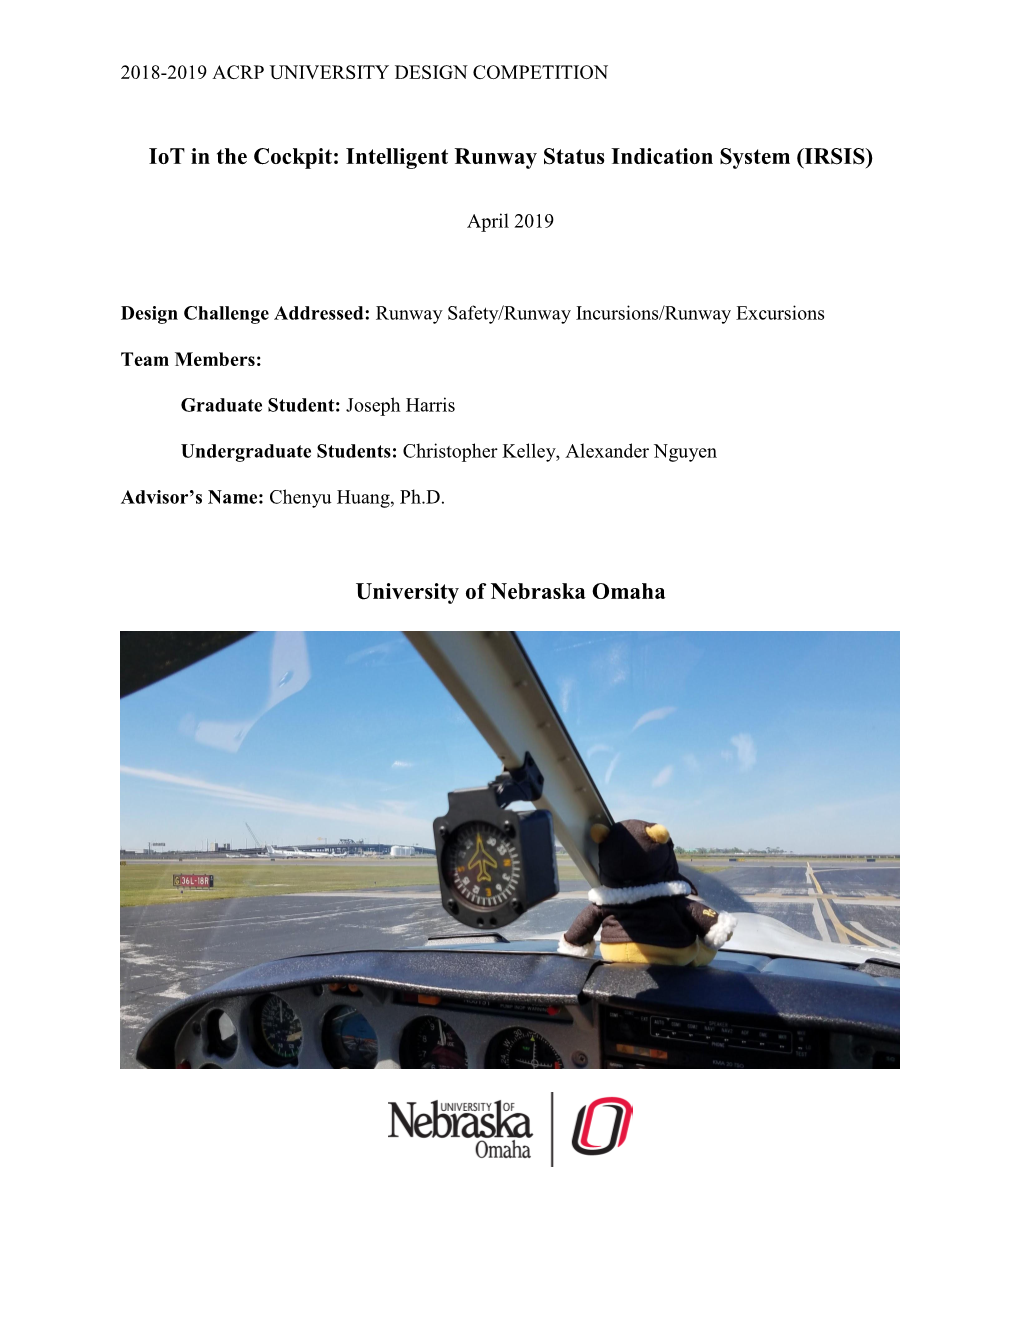 Iot in the Cockpit: Intelligent Runway Status Indication System (IRSIS) University of Nebraska Omaha